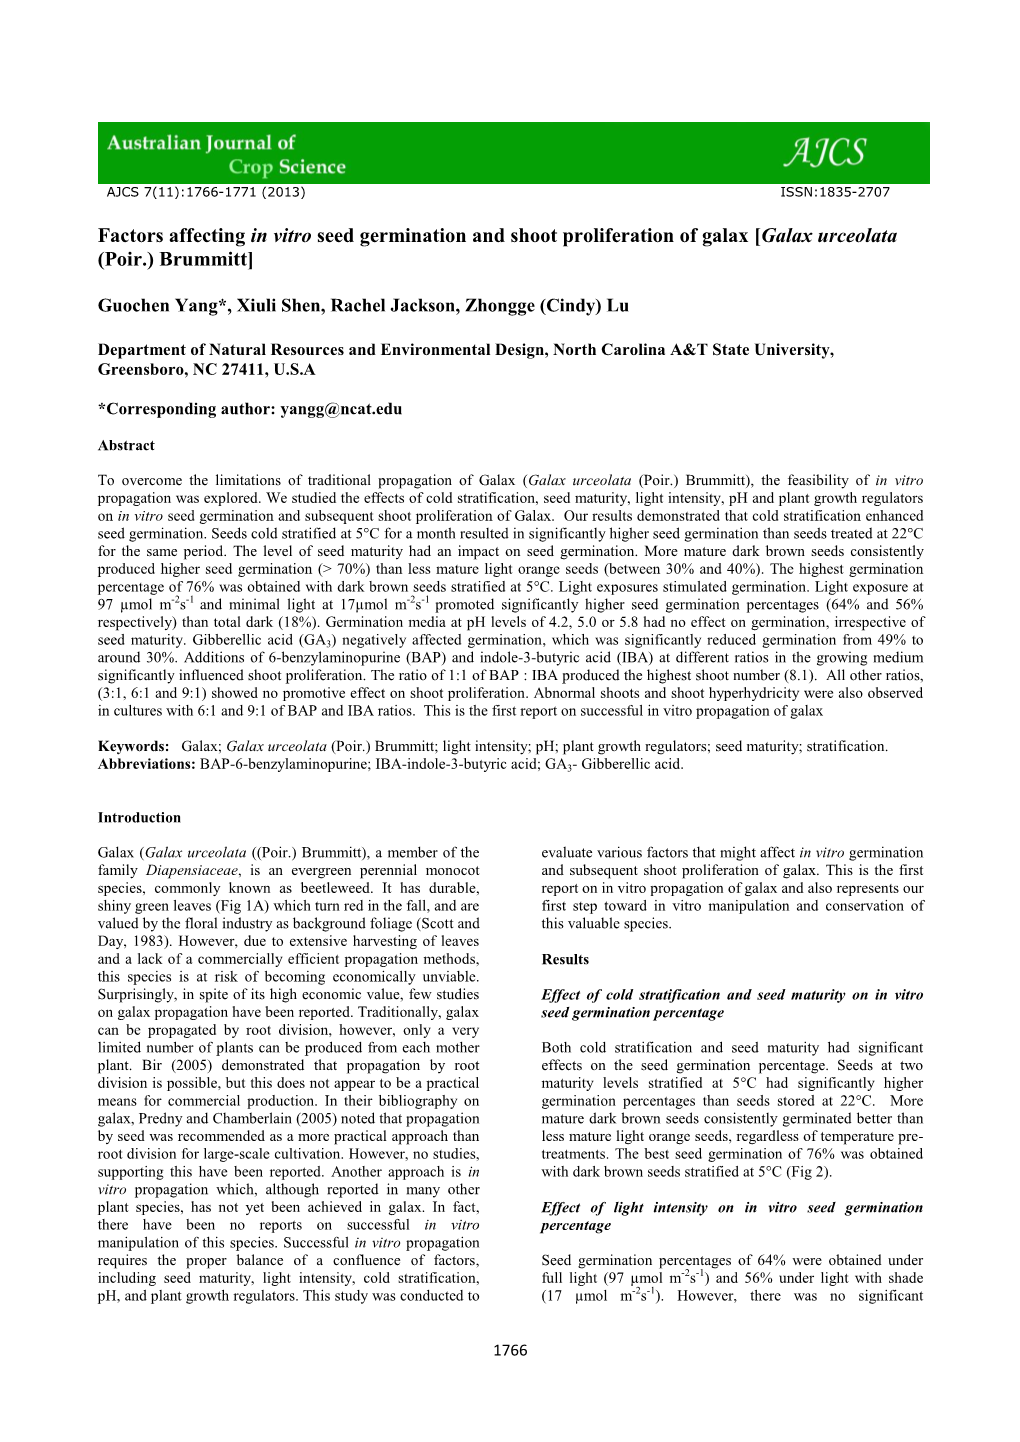 Factors Affecting in Vitro Seed Germination and Shoot Proliferation of Galax [Galax Urceolata (Poir.) Brummitt]